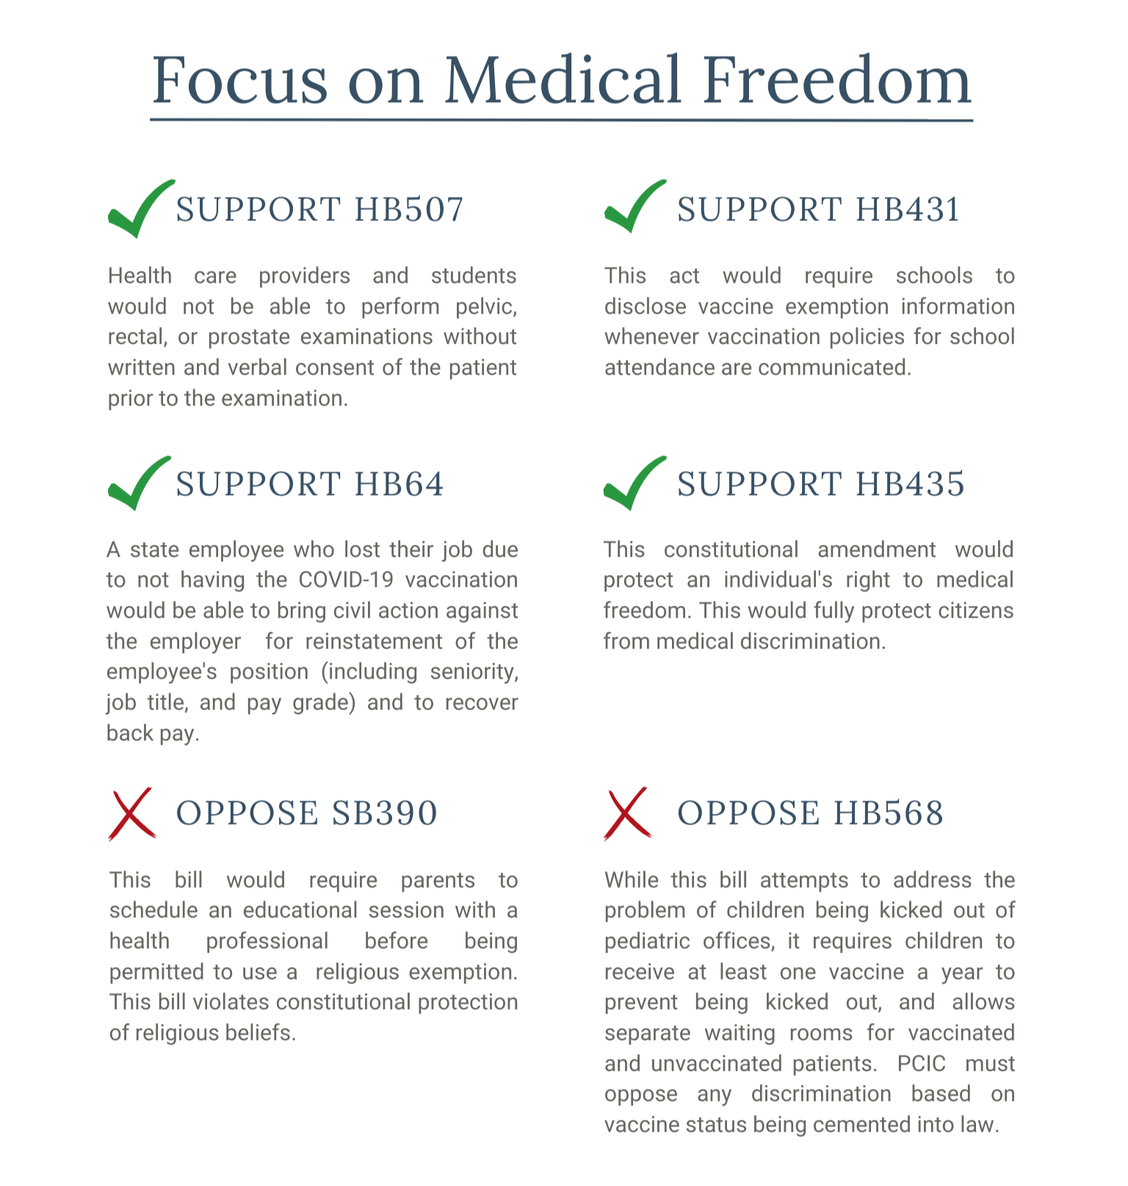 Focus on Medical Freedom